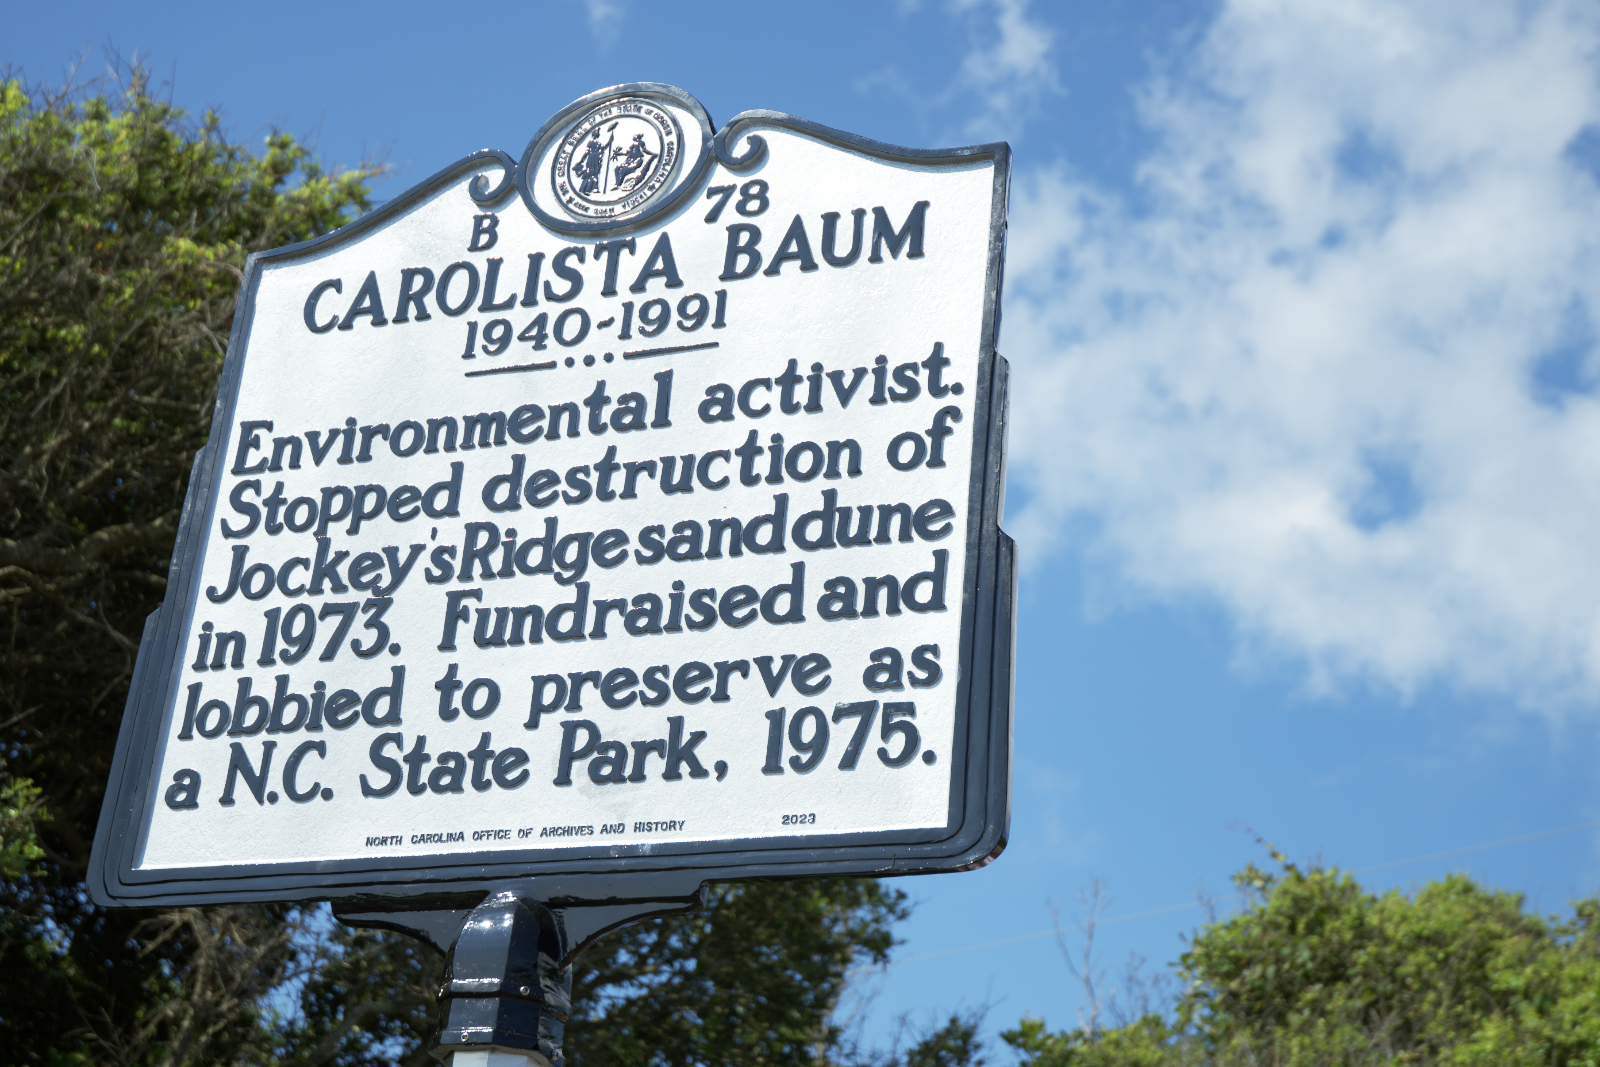 Jockey’s Ridge State Park & Carolista Baum | Outer Banks History | Carolina Designs